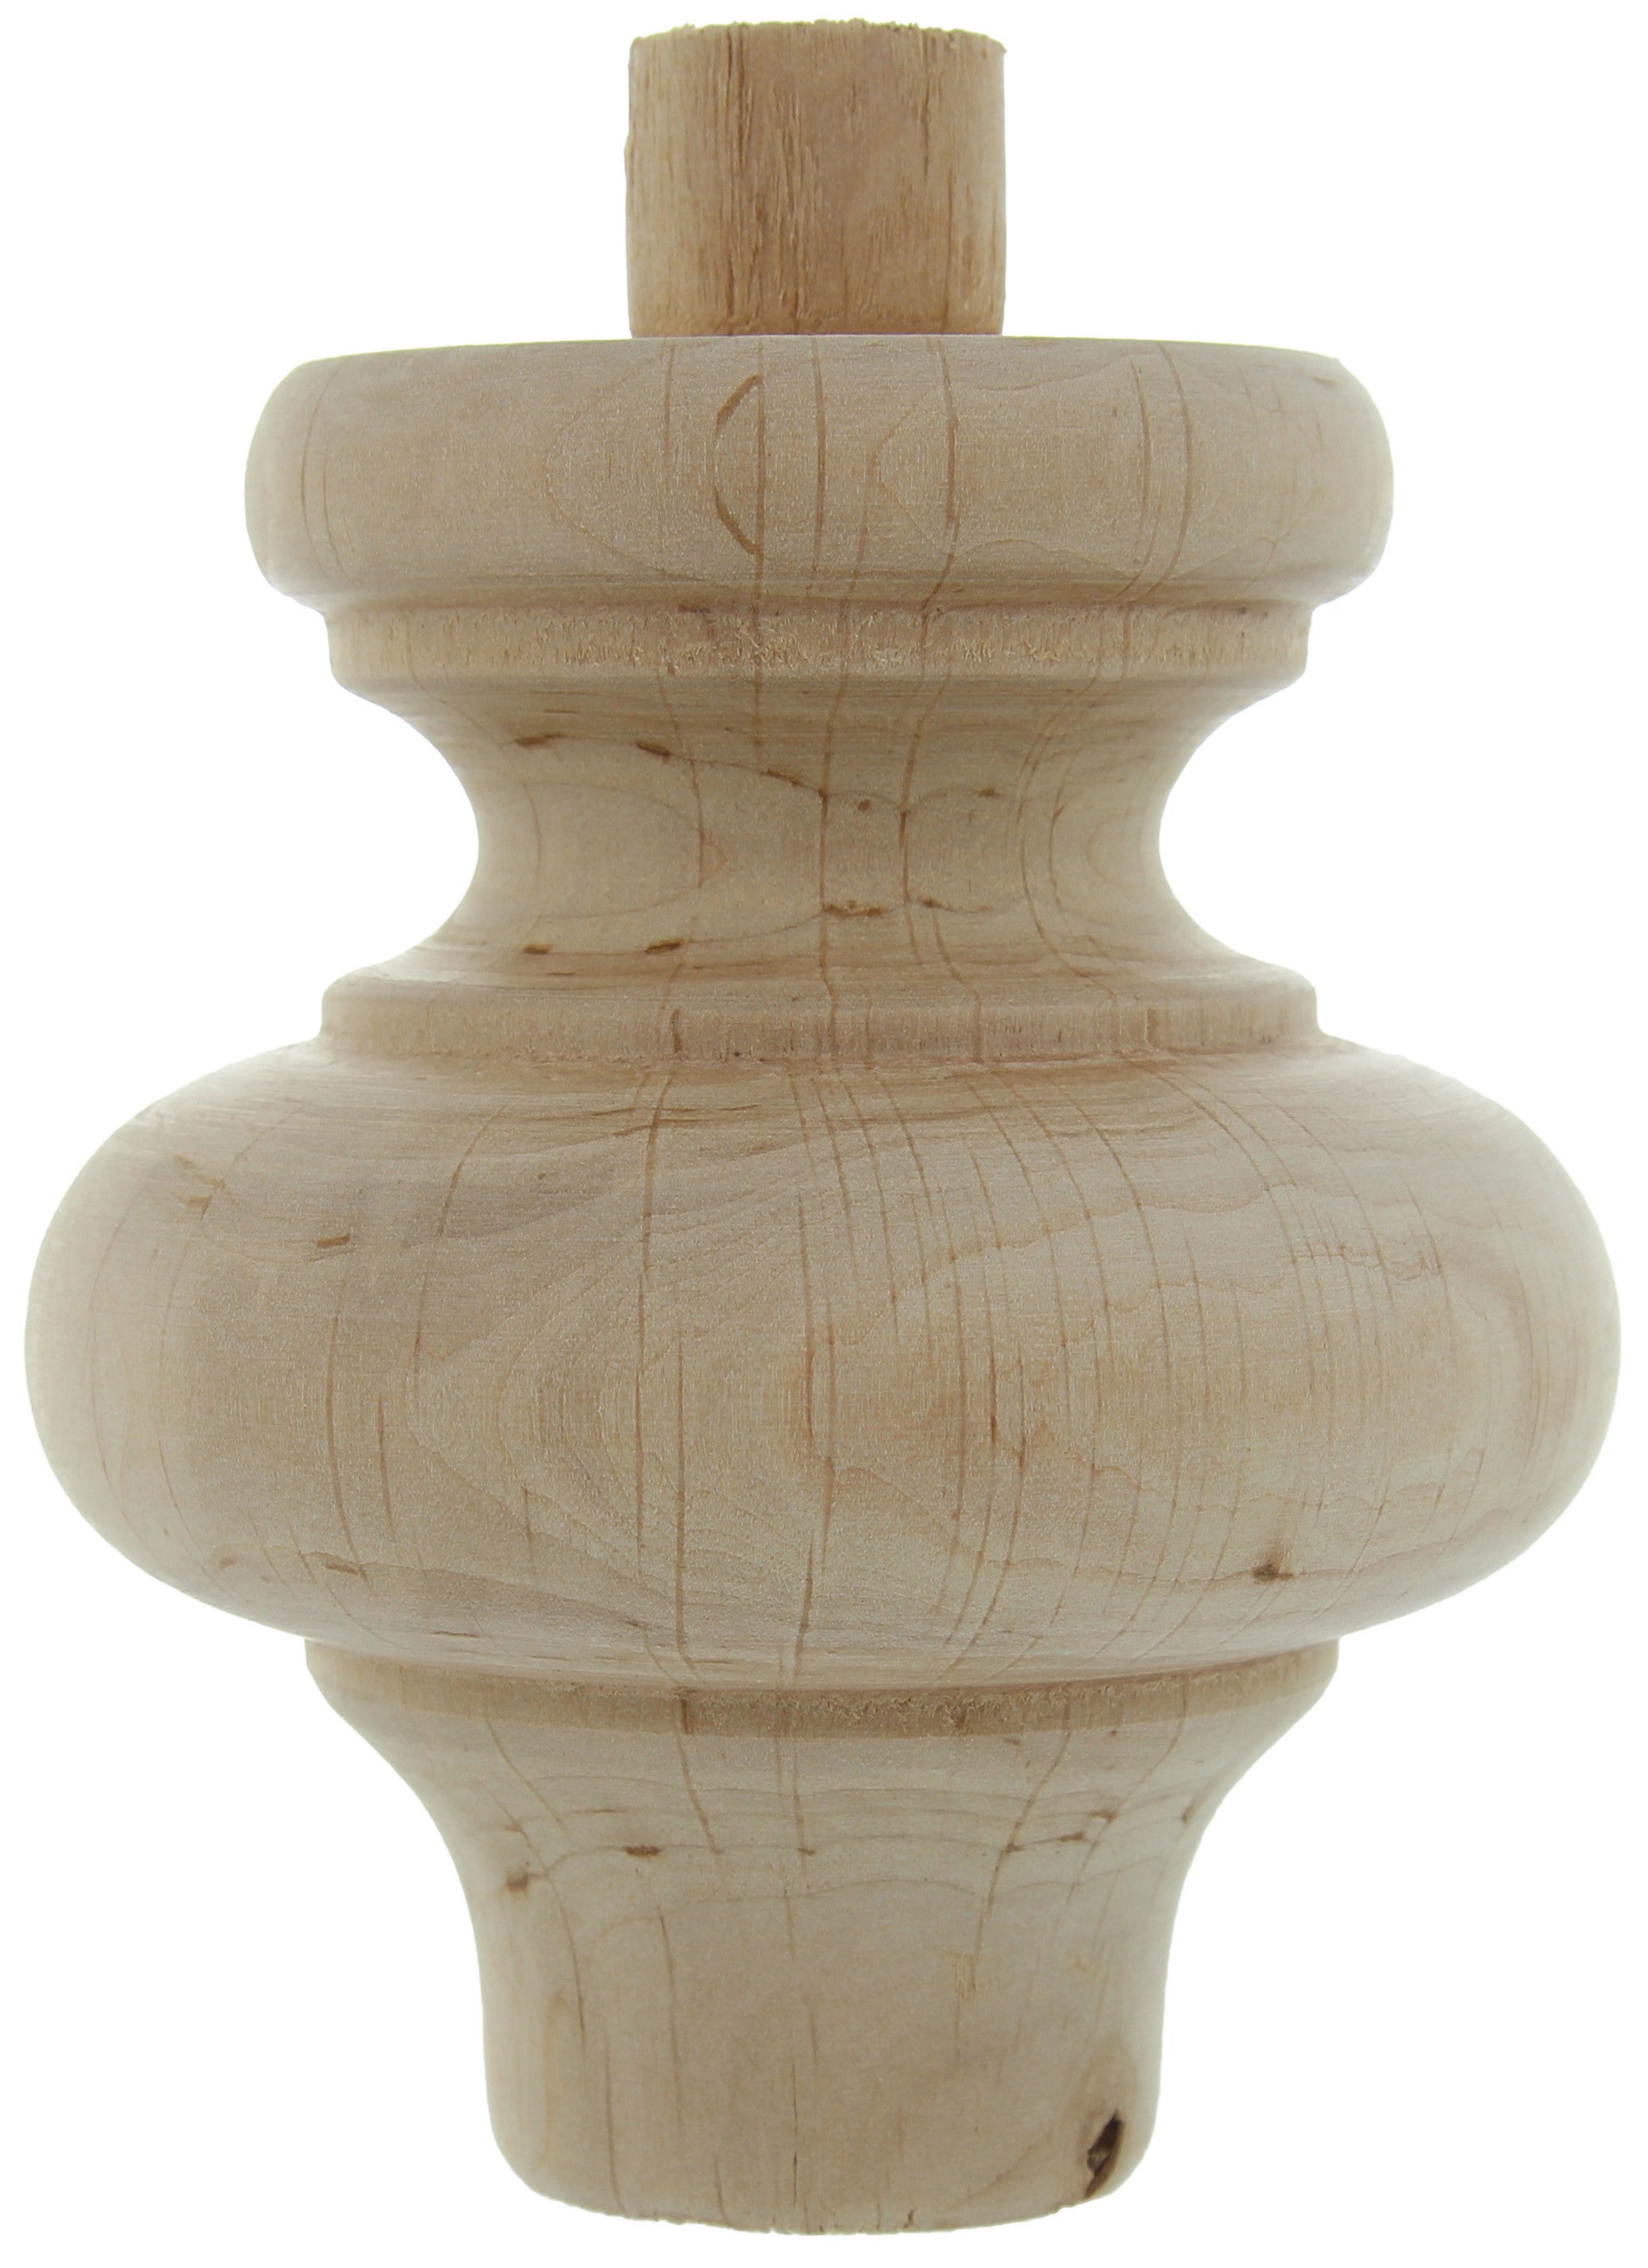 Piede legno ontano art.53014 mm.95x118